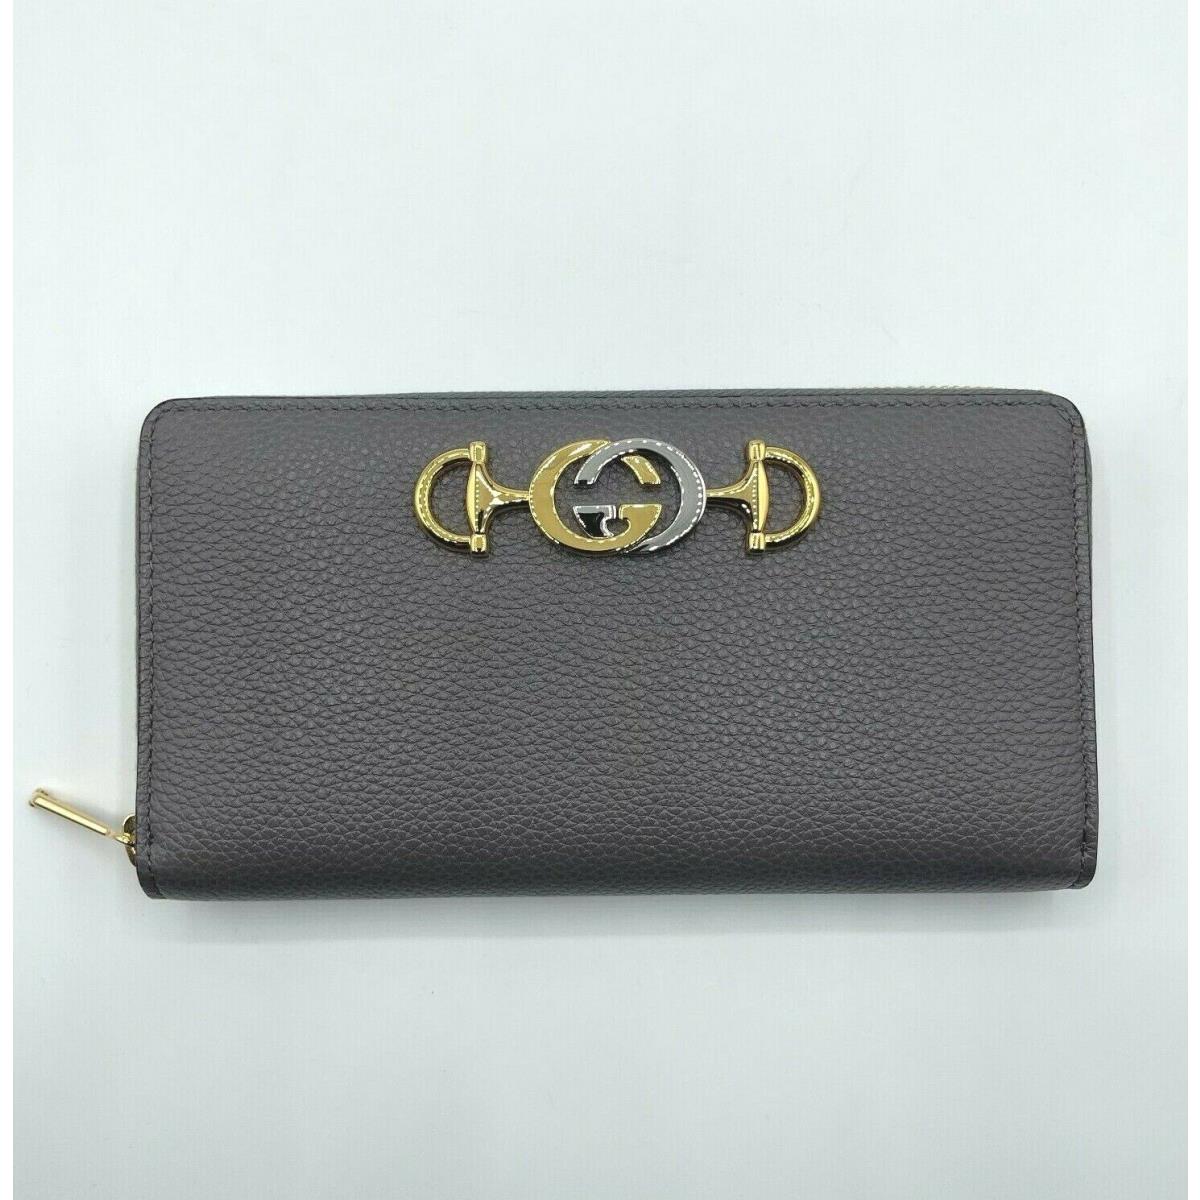 Gucci Zumi Grey Leather Zip Around Wallet with Metal GG Logo 570661 1275